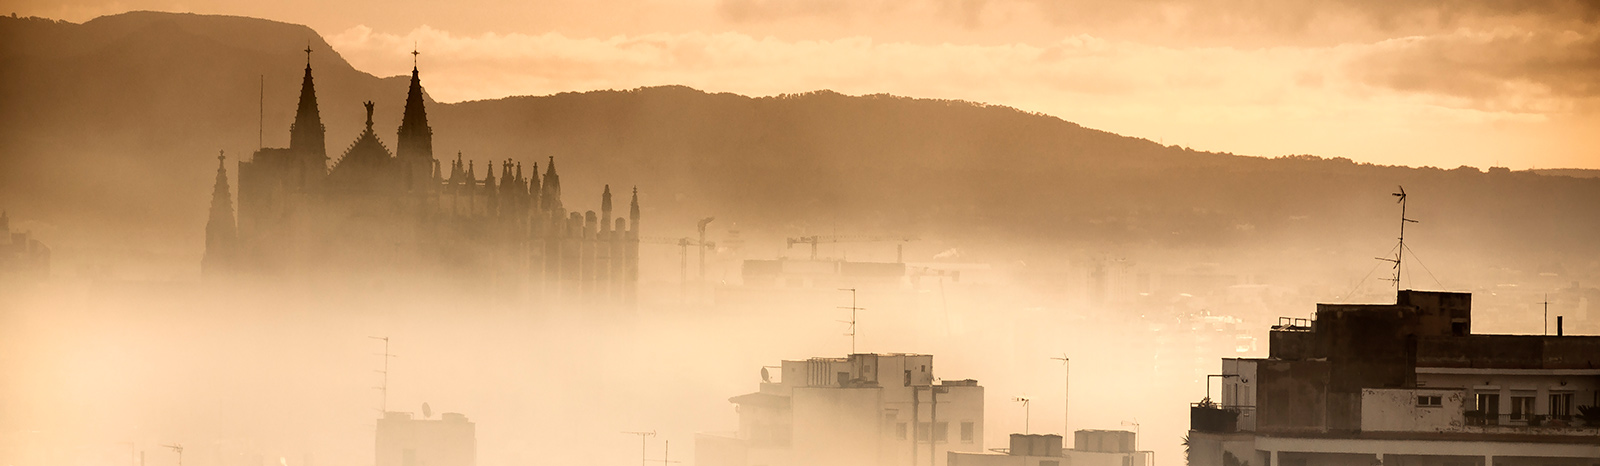 Cattedrale di Palma di Maiorca nella nebbia